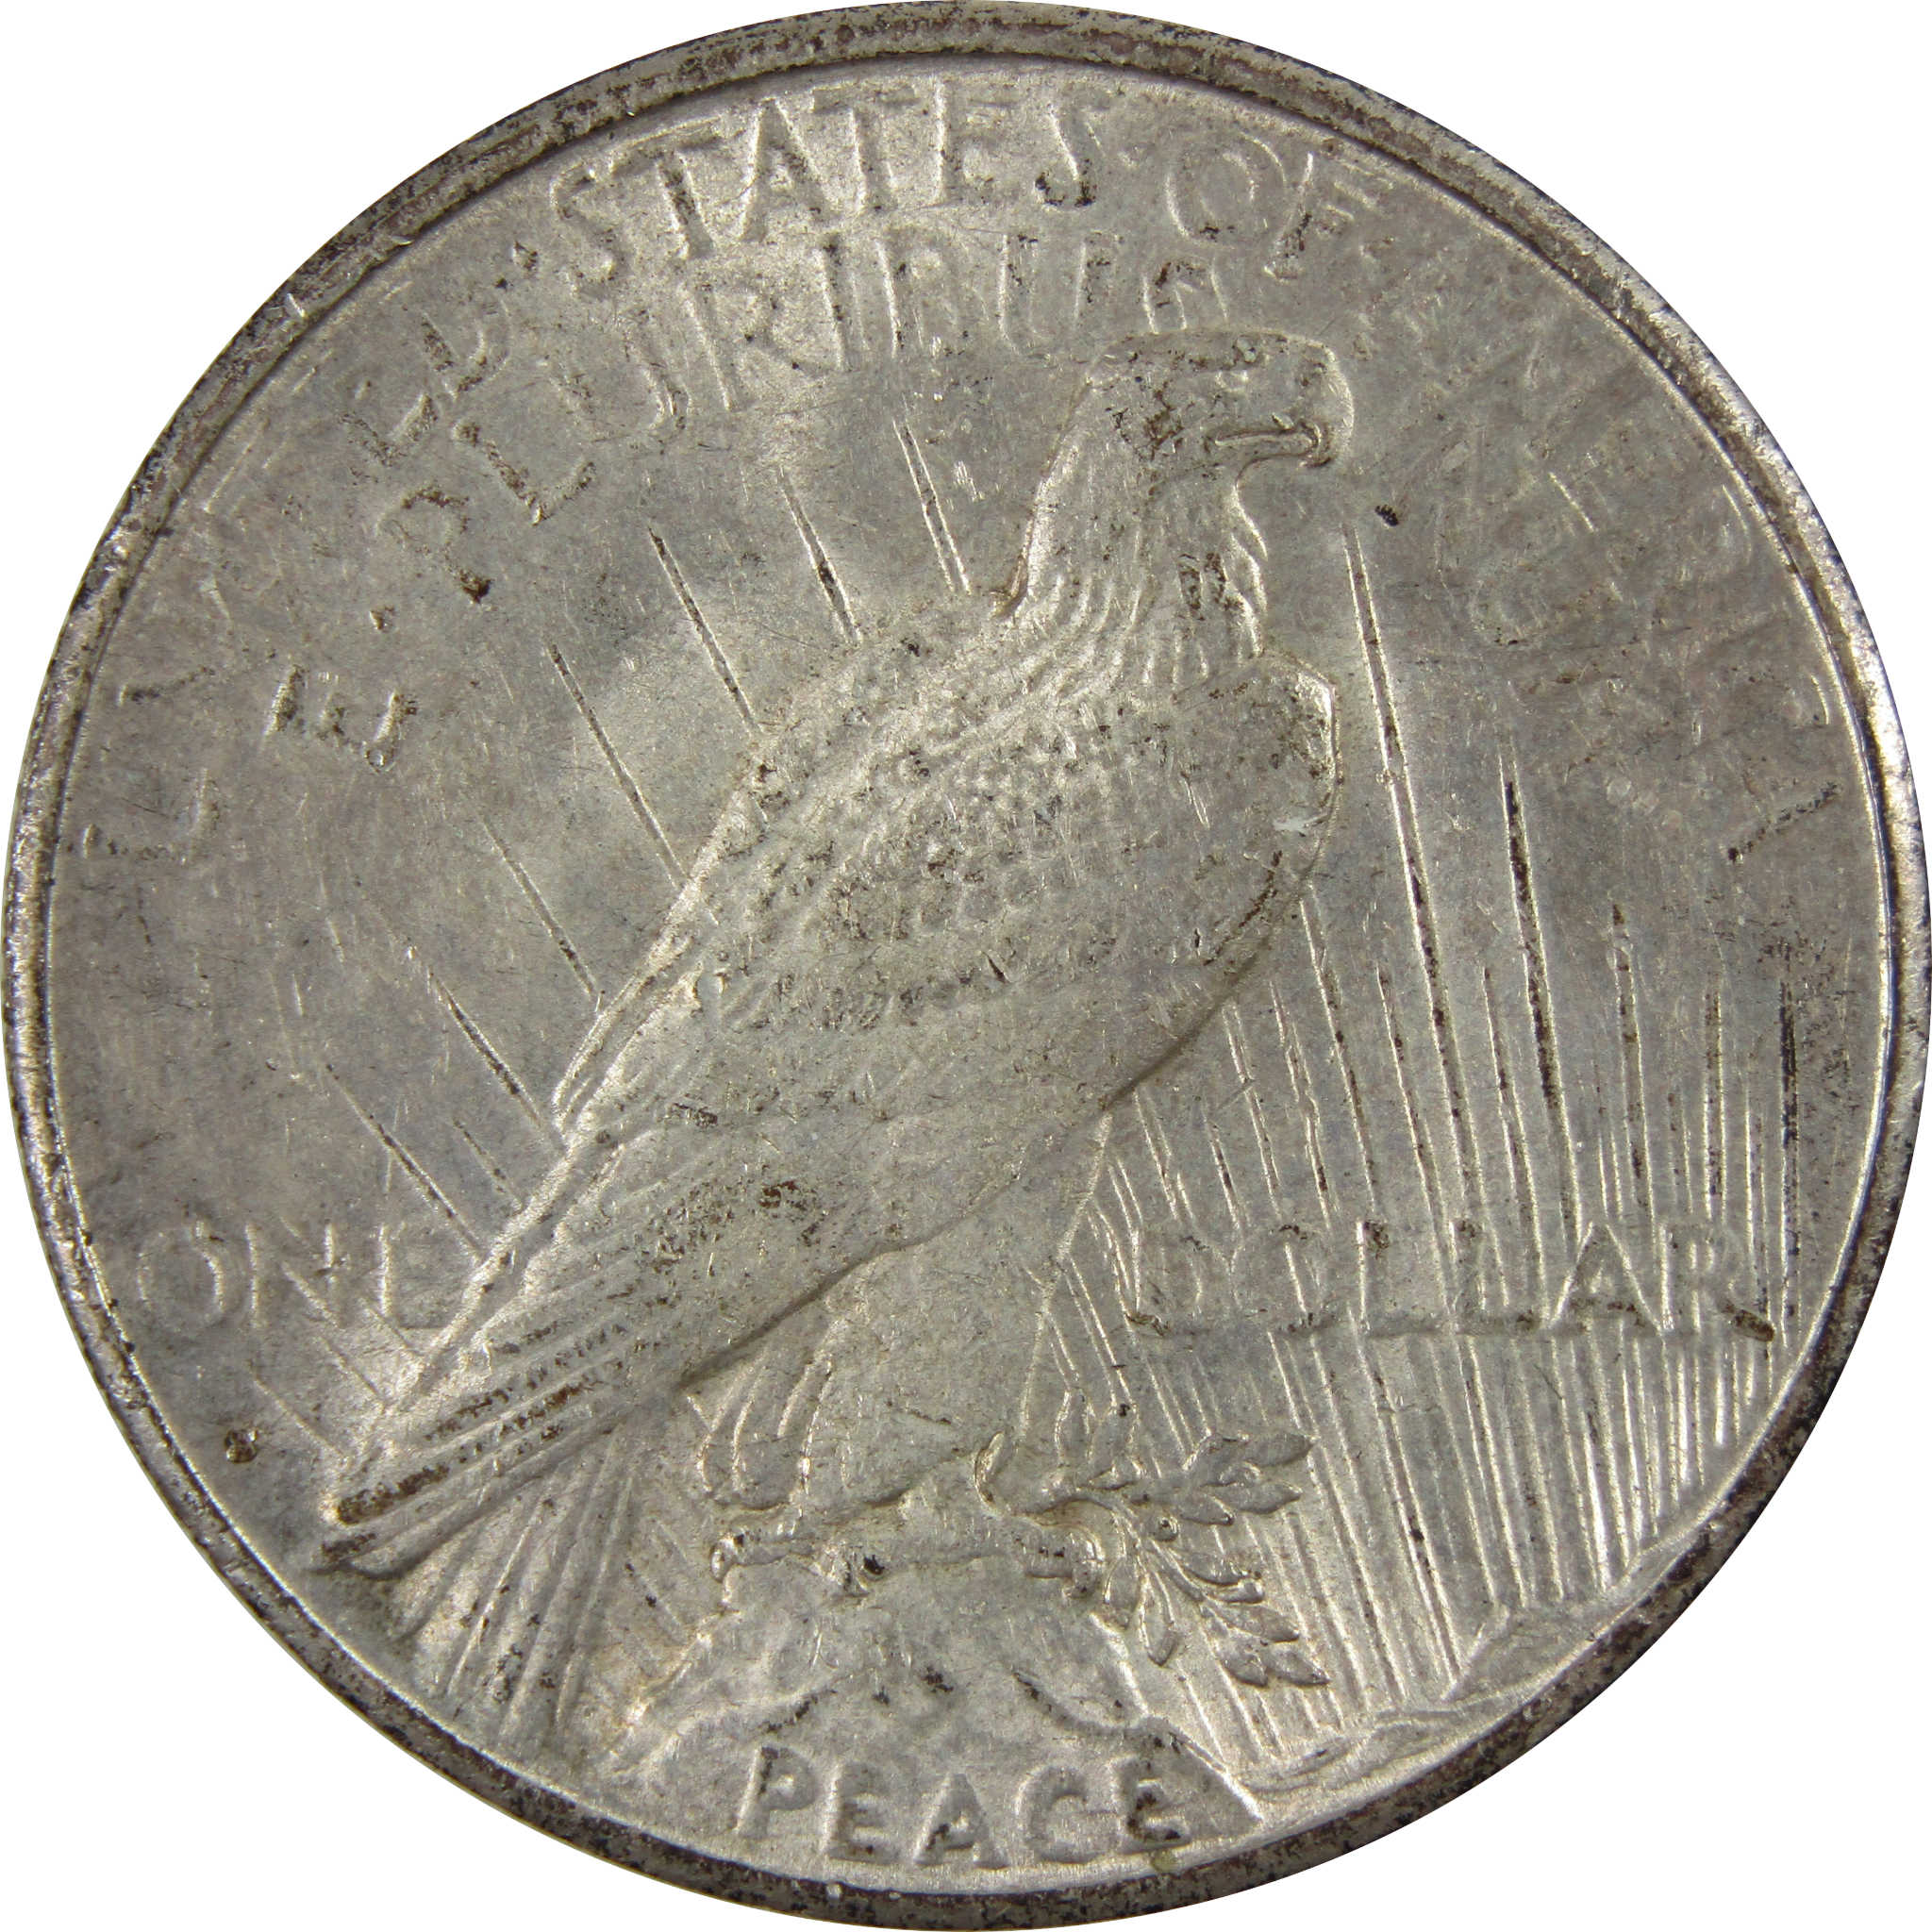 1934 S Peace Dollar Borderline Uncirculated 90% Silver $1 SKU:I4364